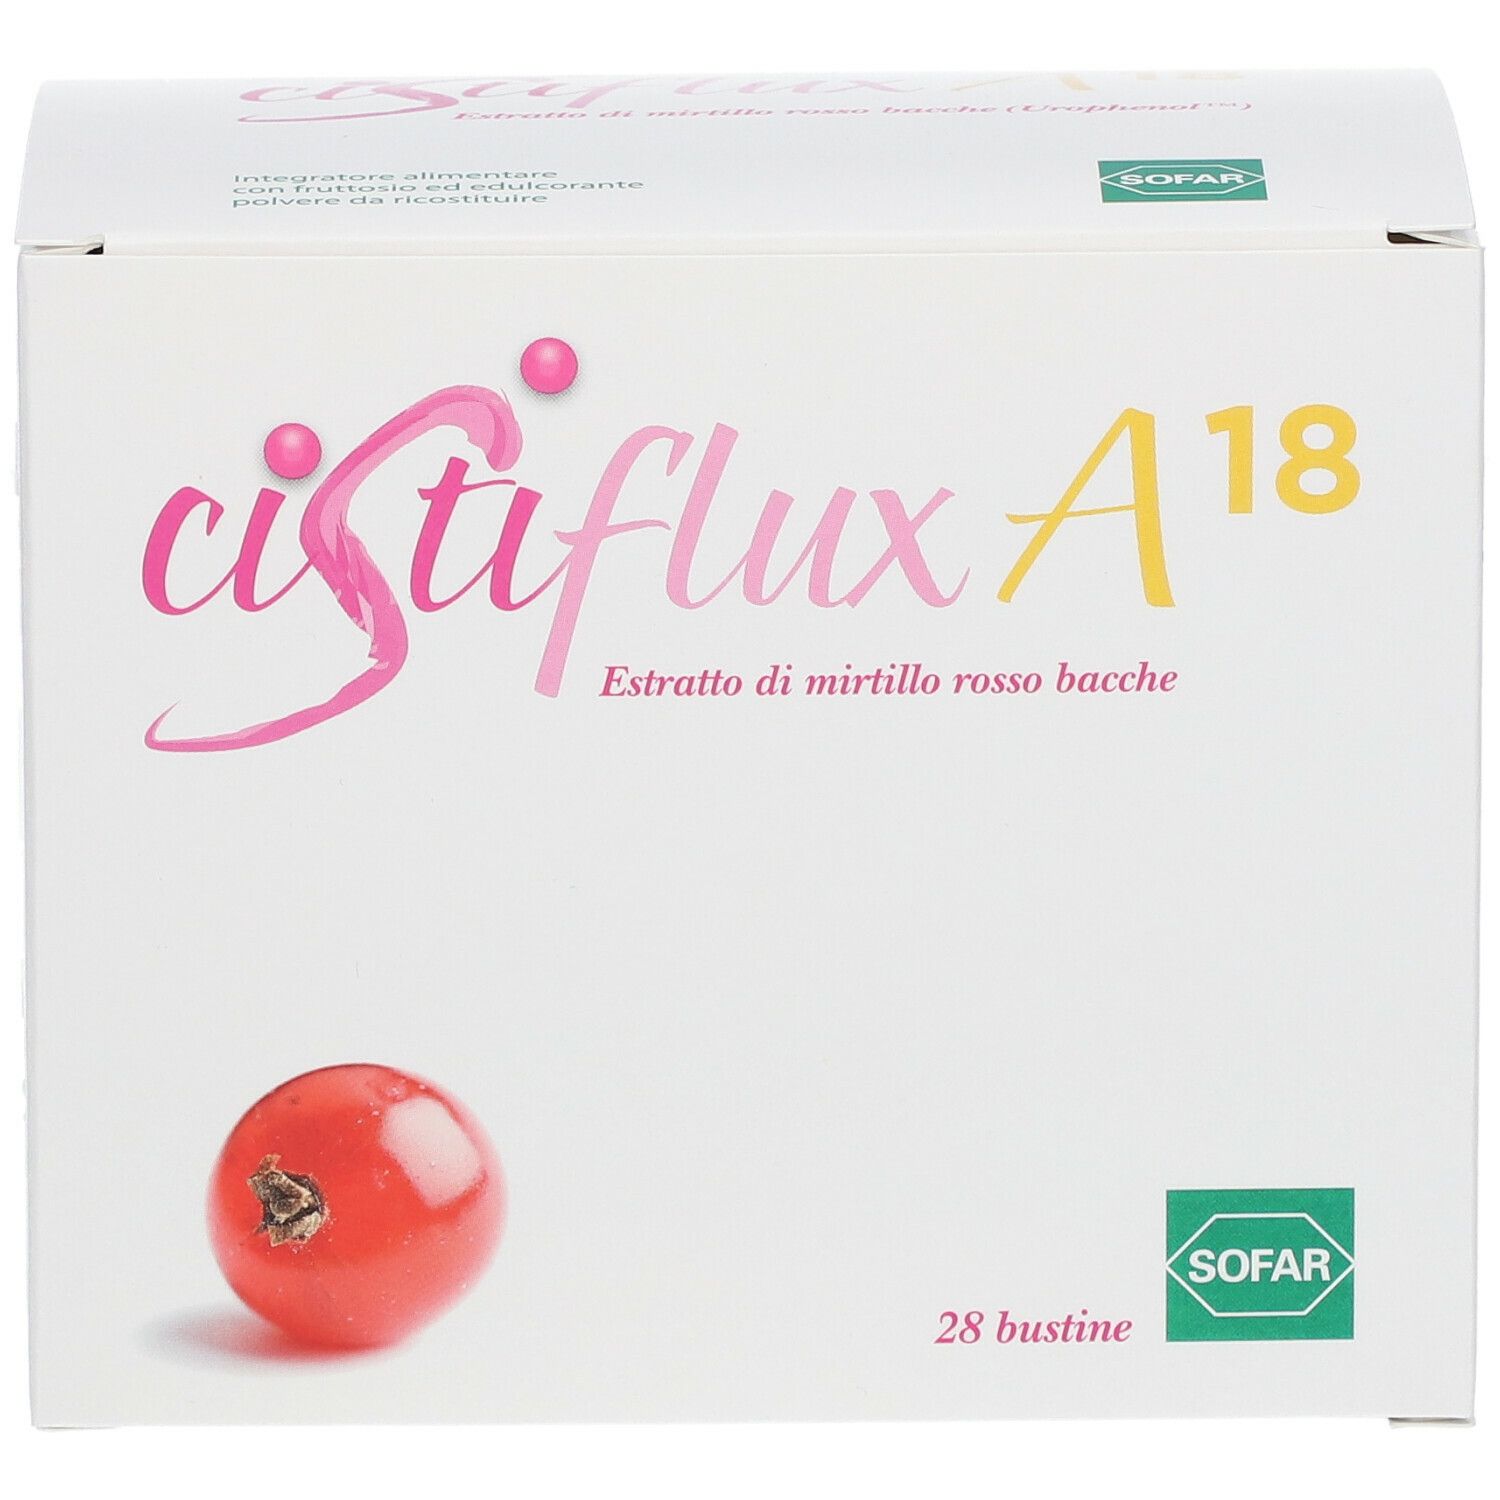 Cistiflux A18